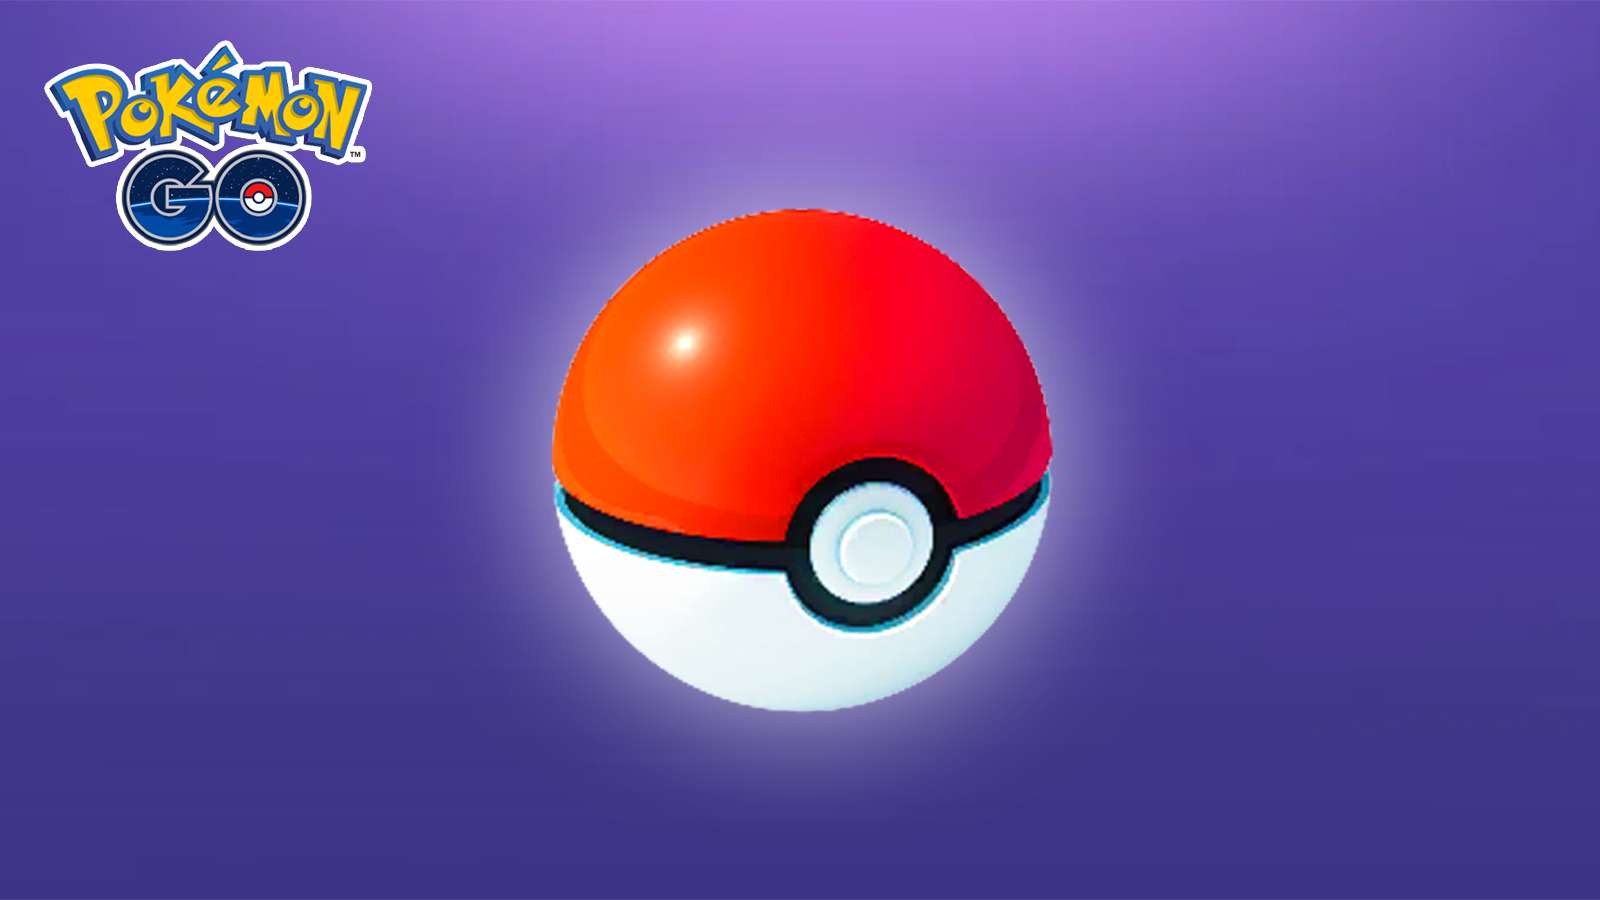 A Poke Ball catching the Transform Pokemon in Pokemon Go